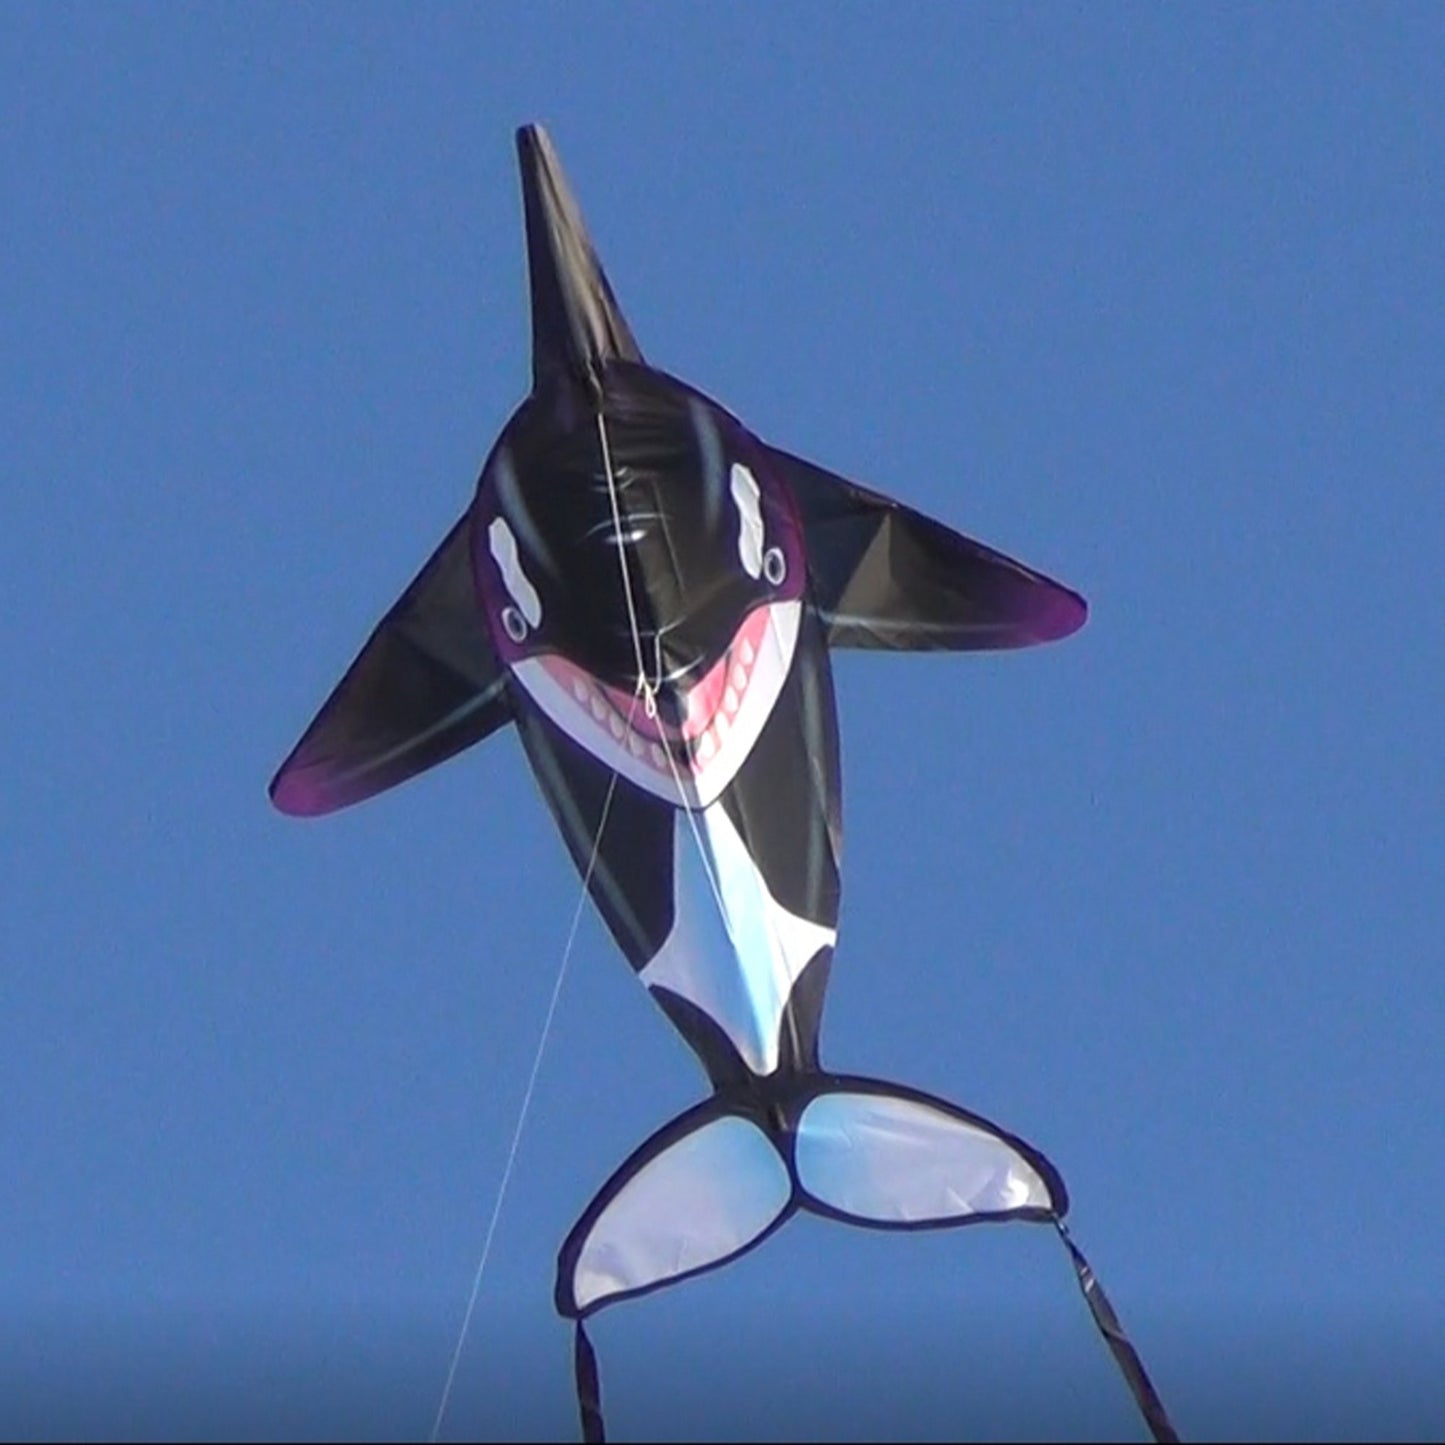 windnsun sealife orca nylon kite flying